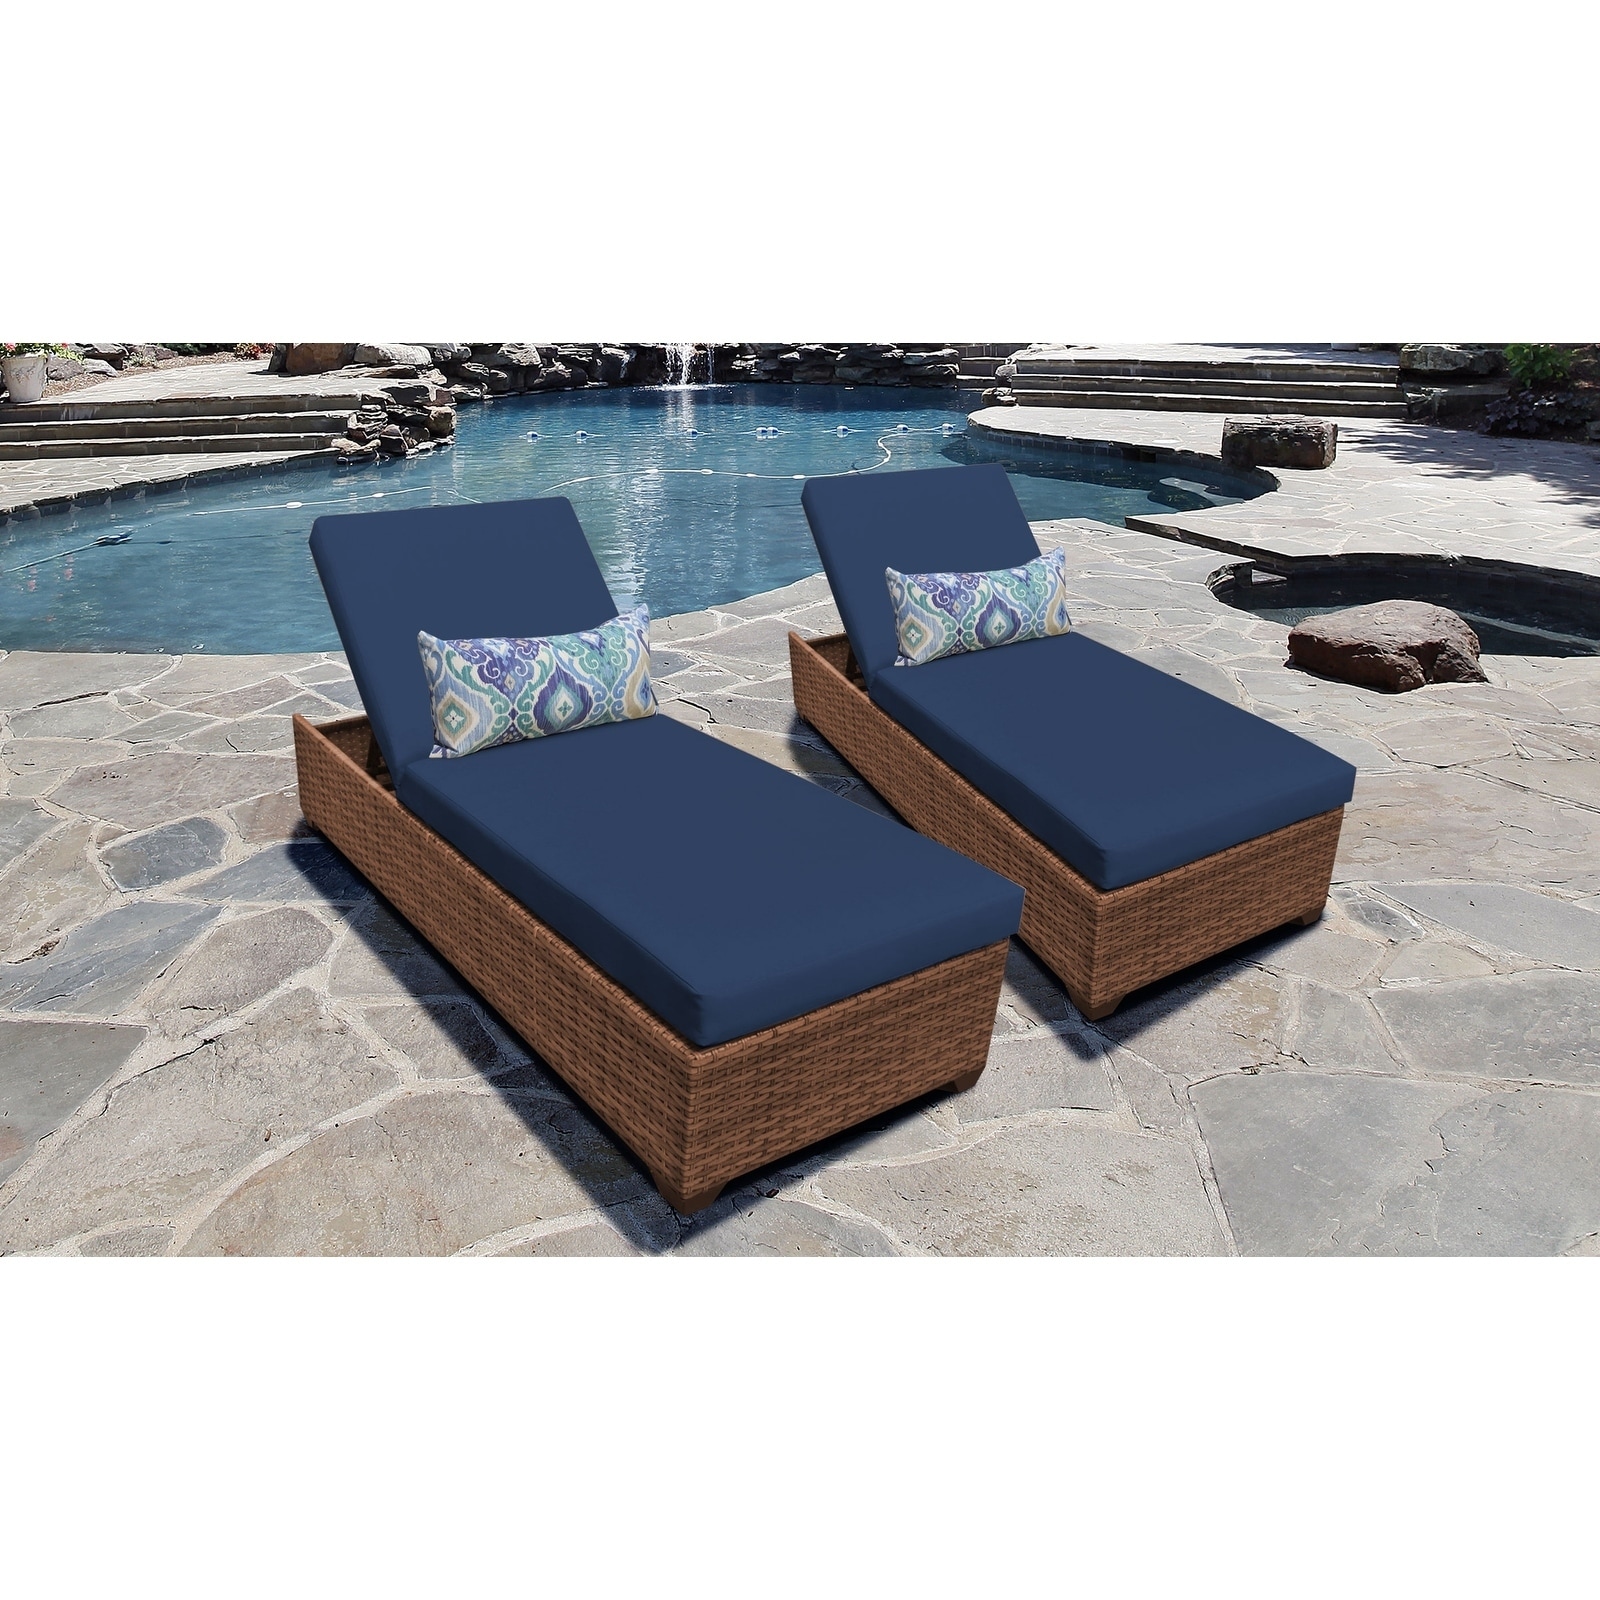 Laguna Chaise Set Of 2 Outdoor Wicker Patio Furniture